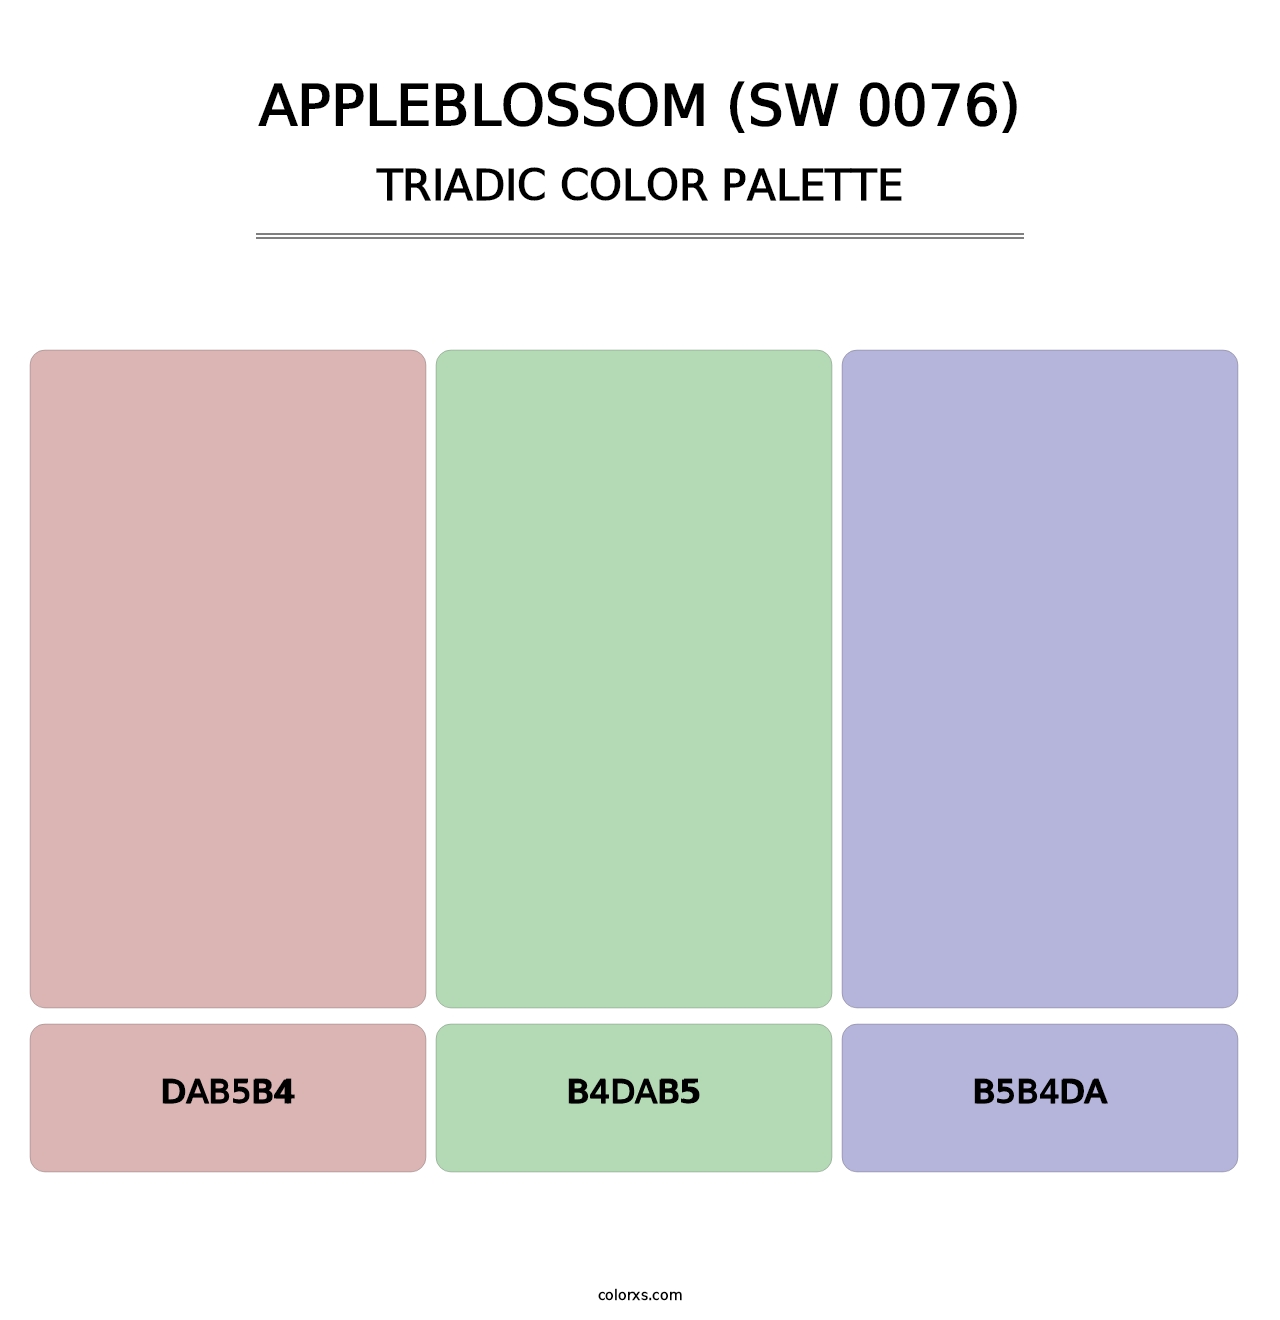 Appleblossom (SW 0076) - Triadic Color Palette